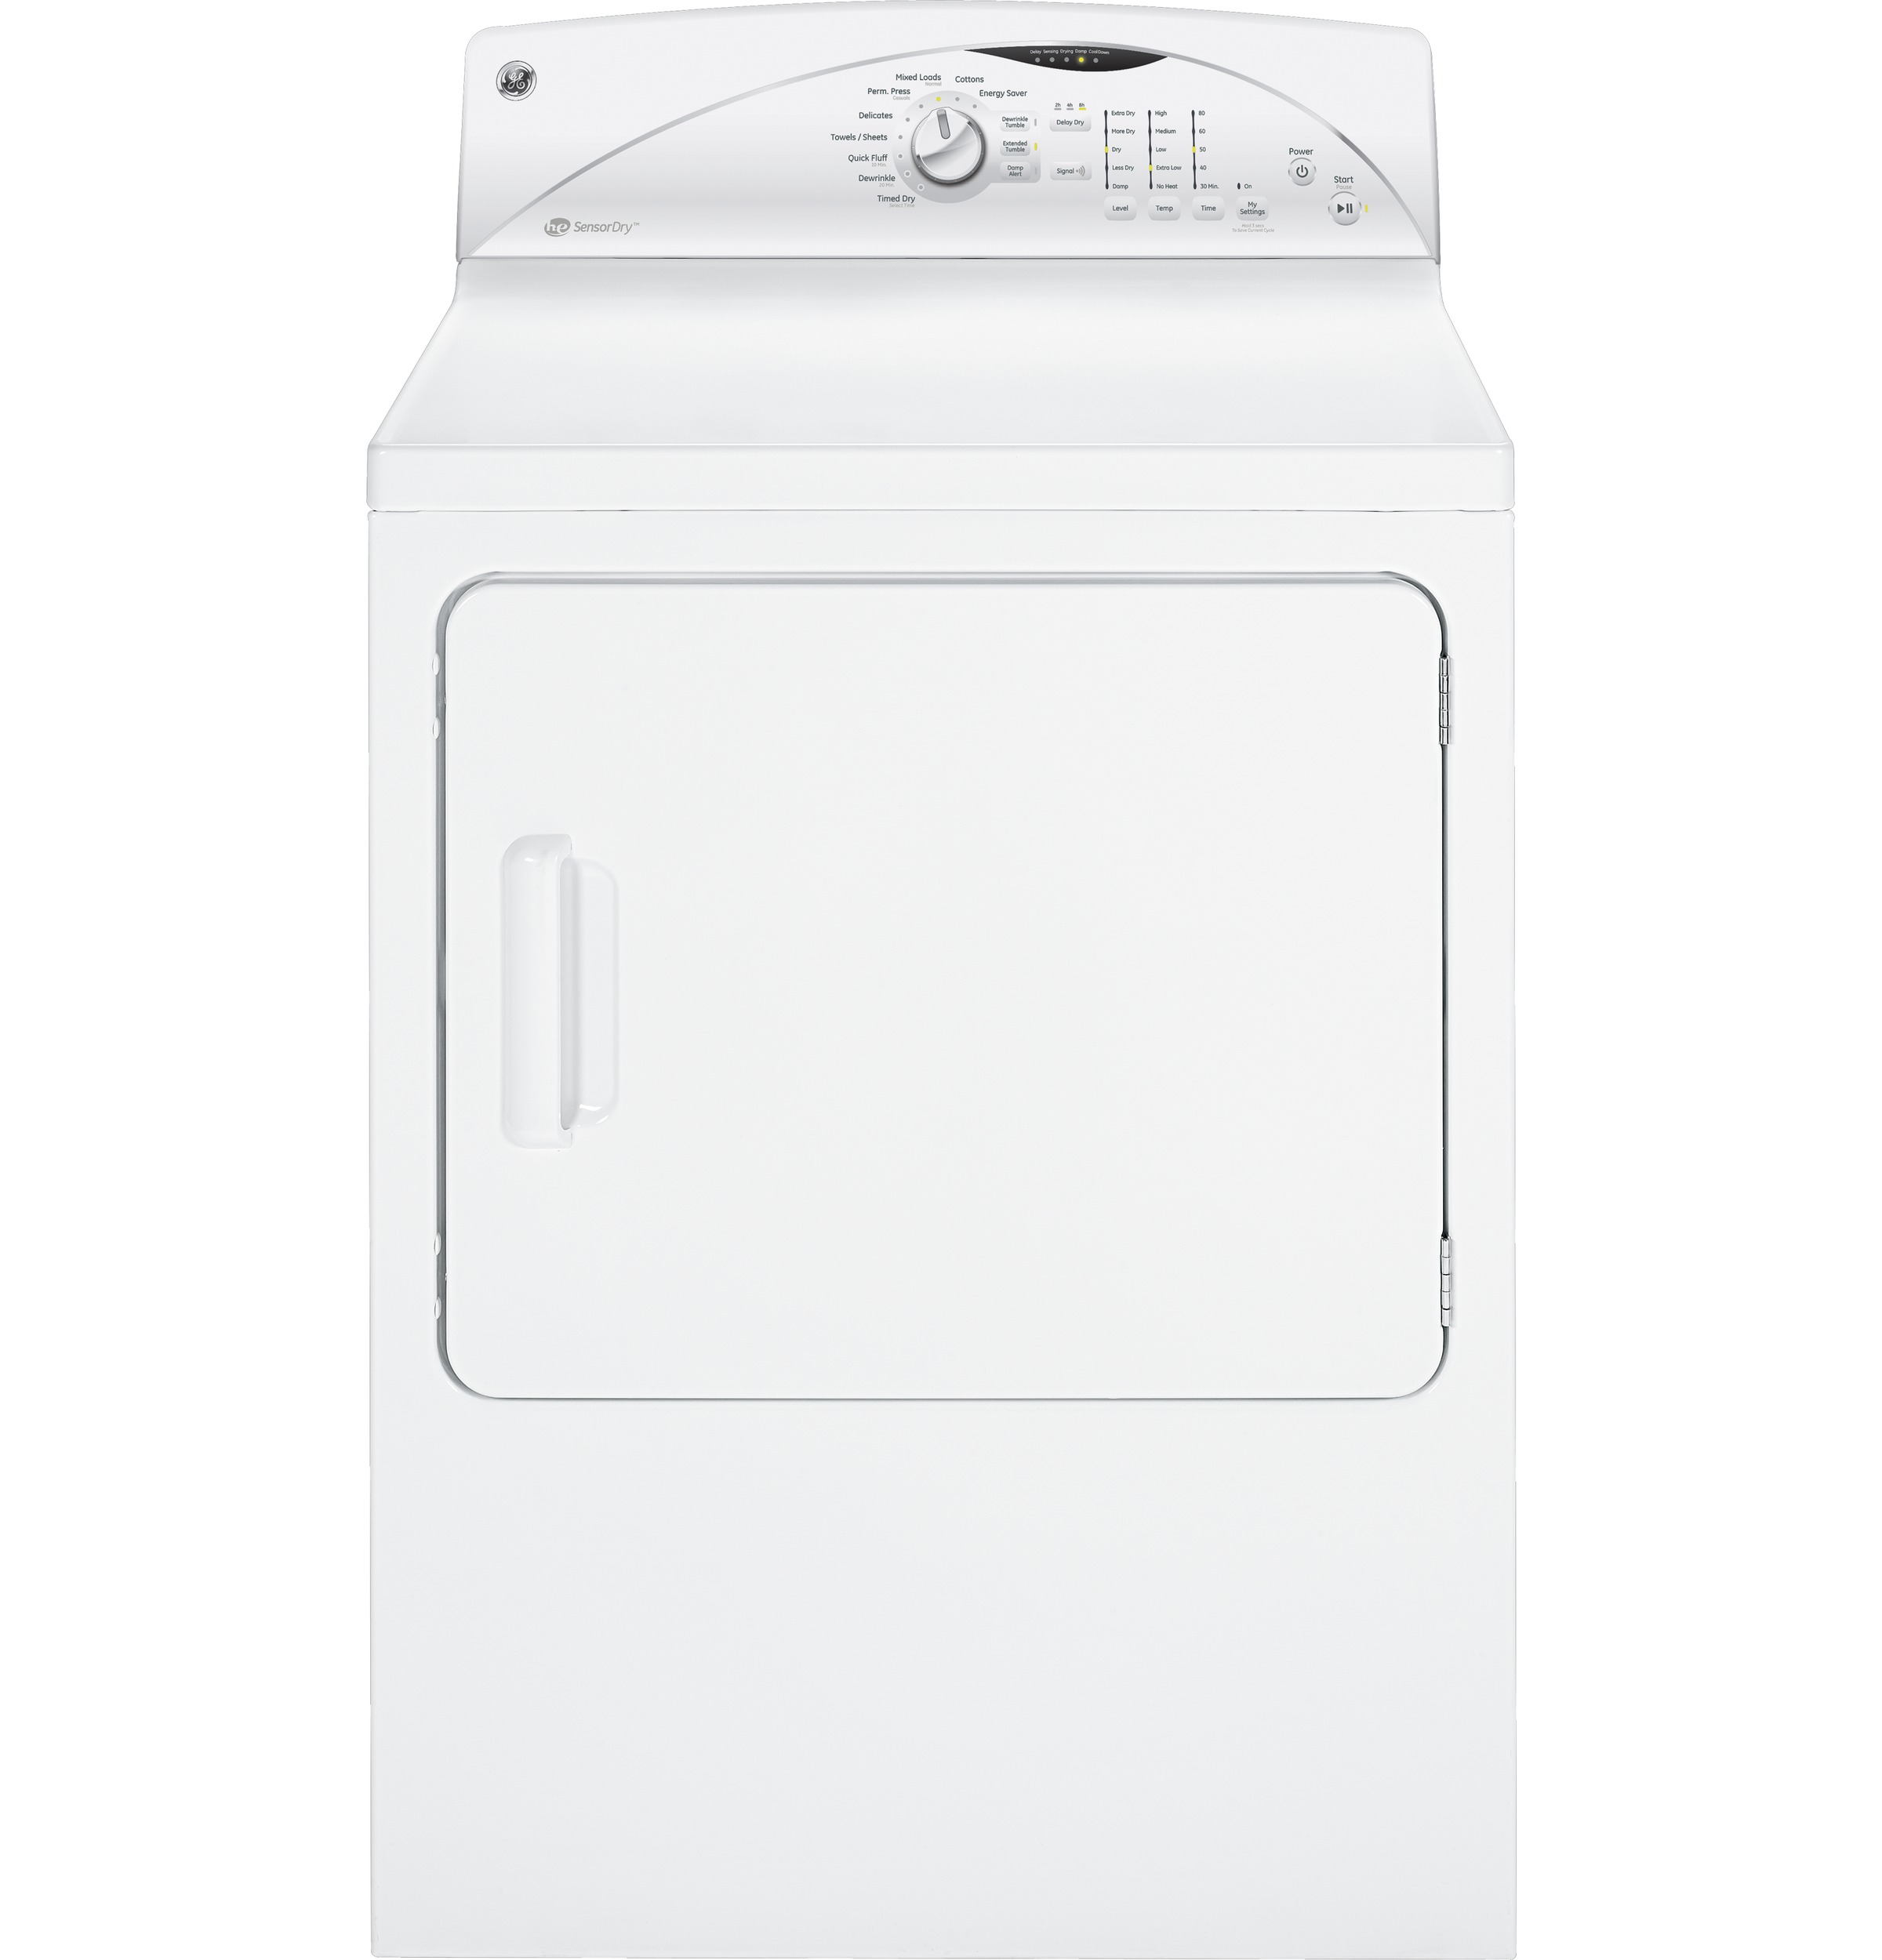 GE® 7.0 cu. ft. capacity Dura Drum electric dryer with HE SensorDry™